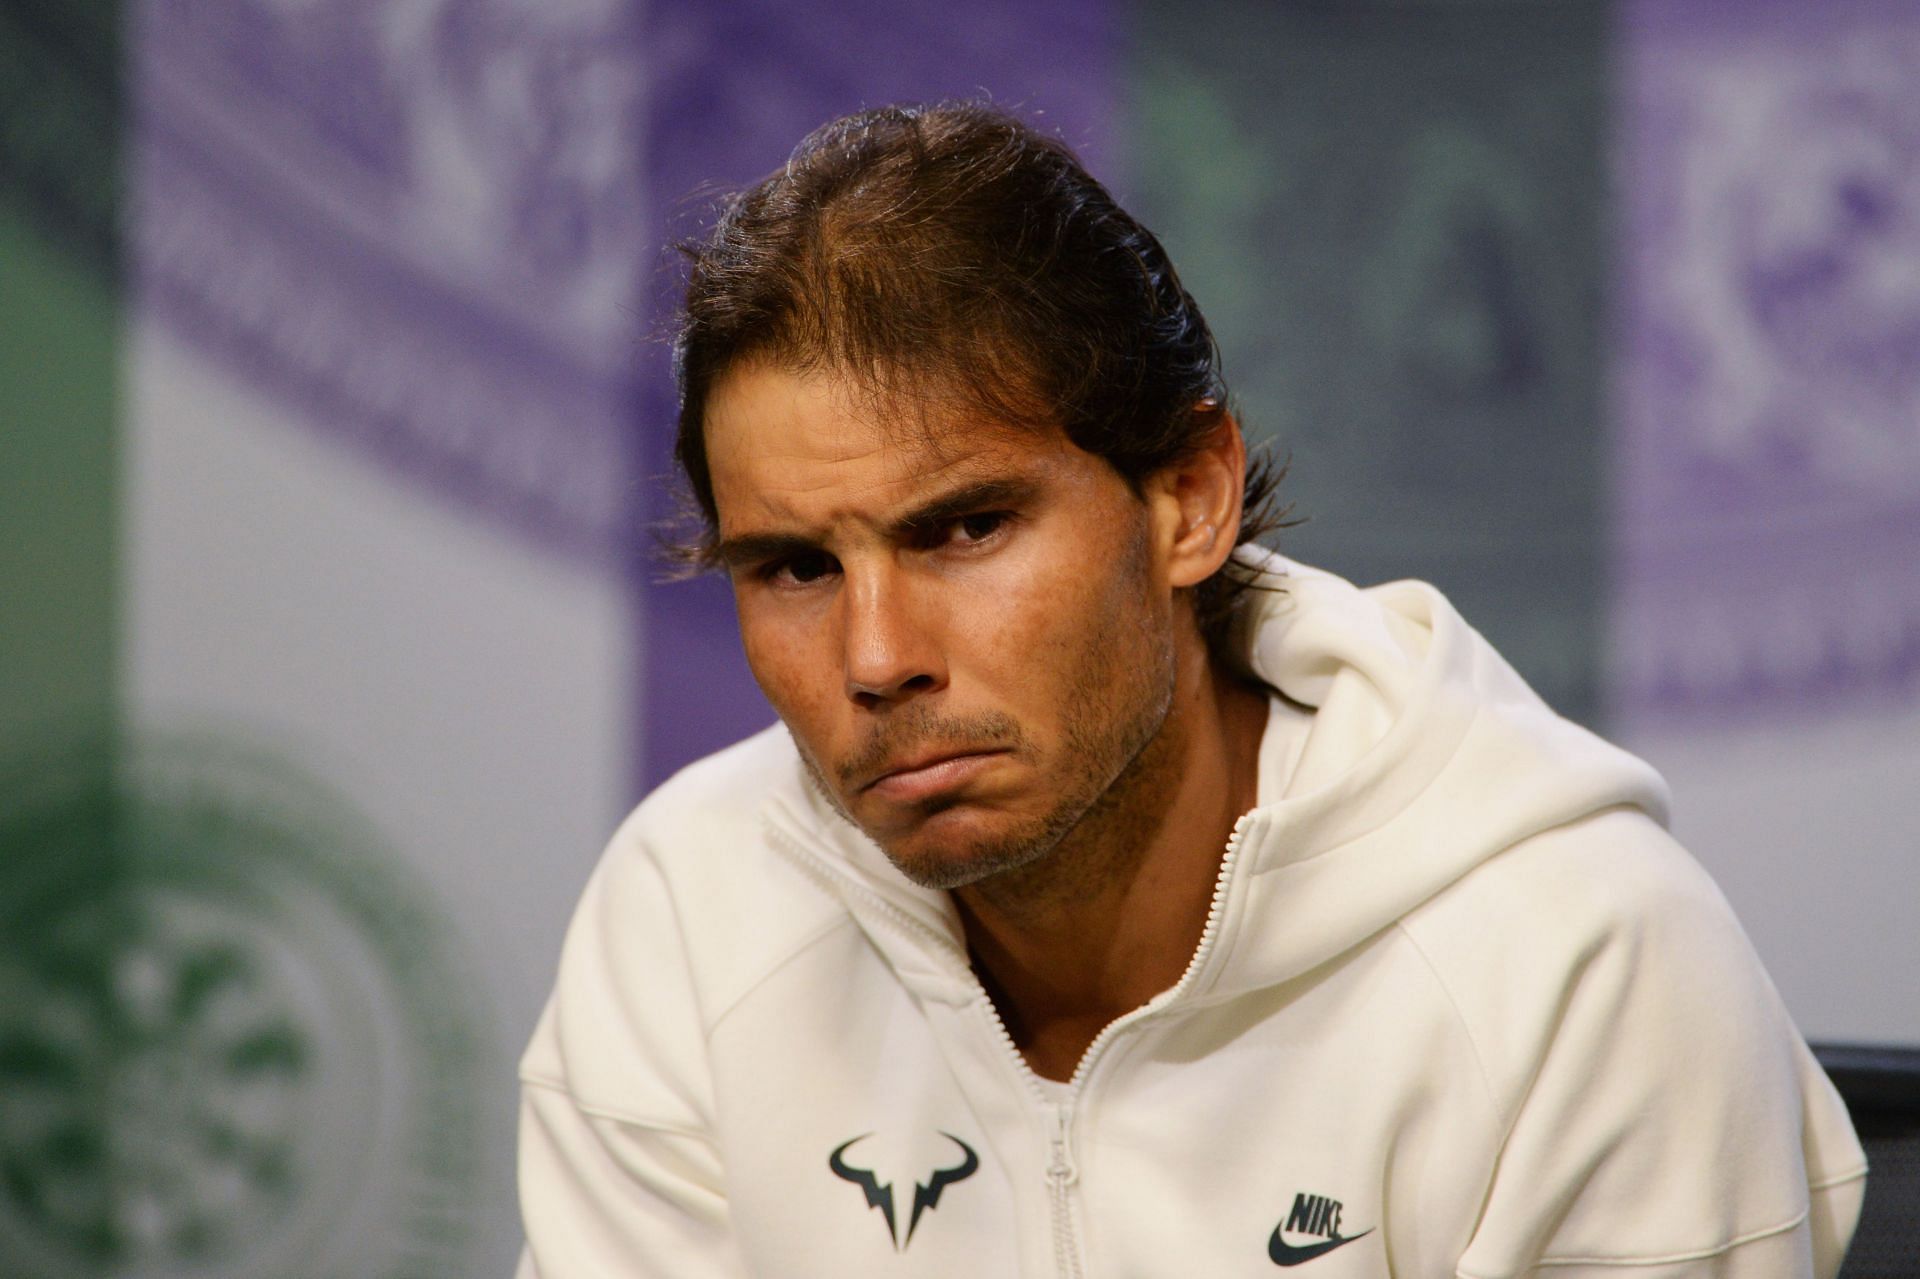 Rafael Nadal has withdrawn from Wimbledon ahead of his semifinals against Nick Kyrgios